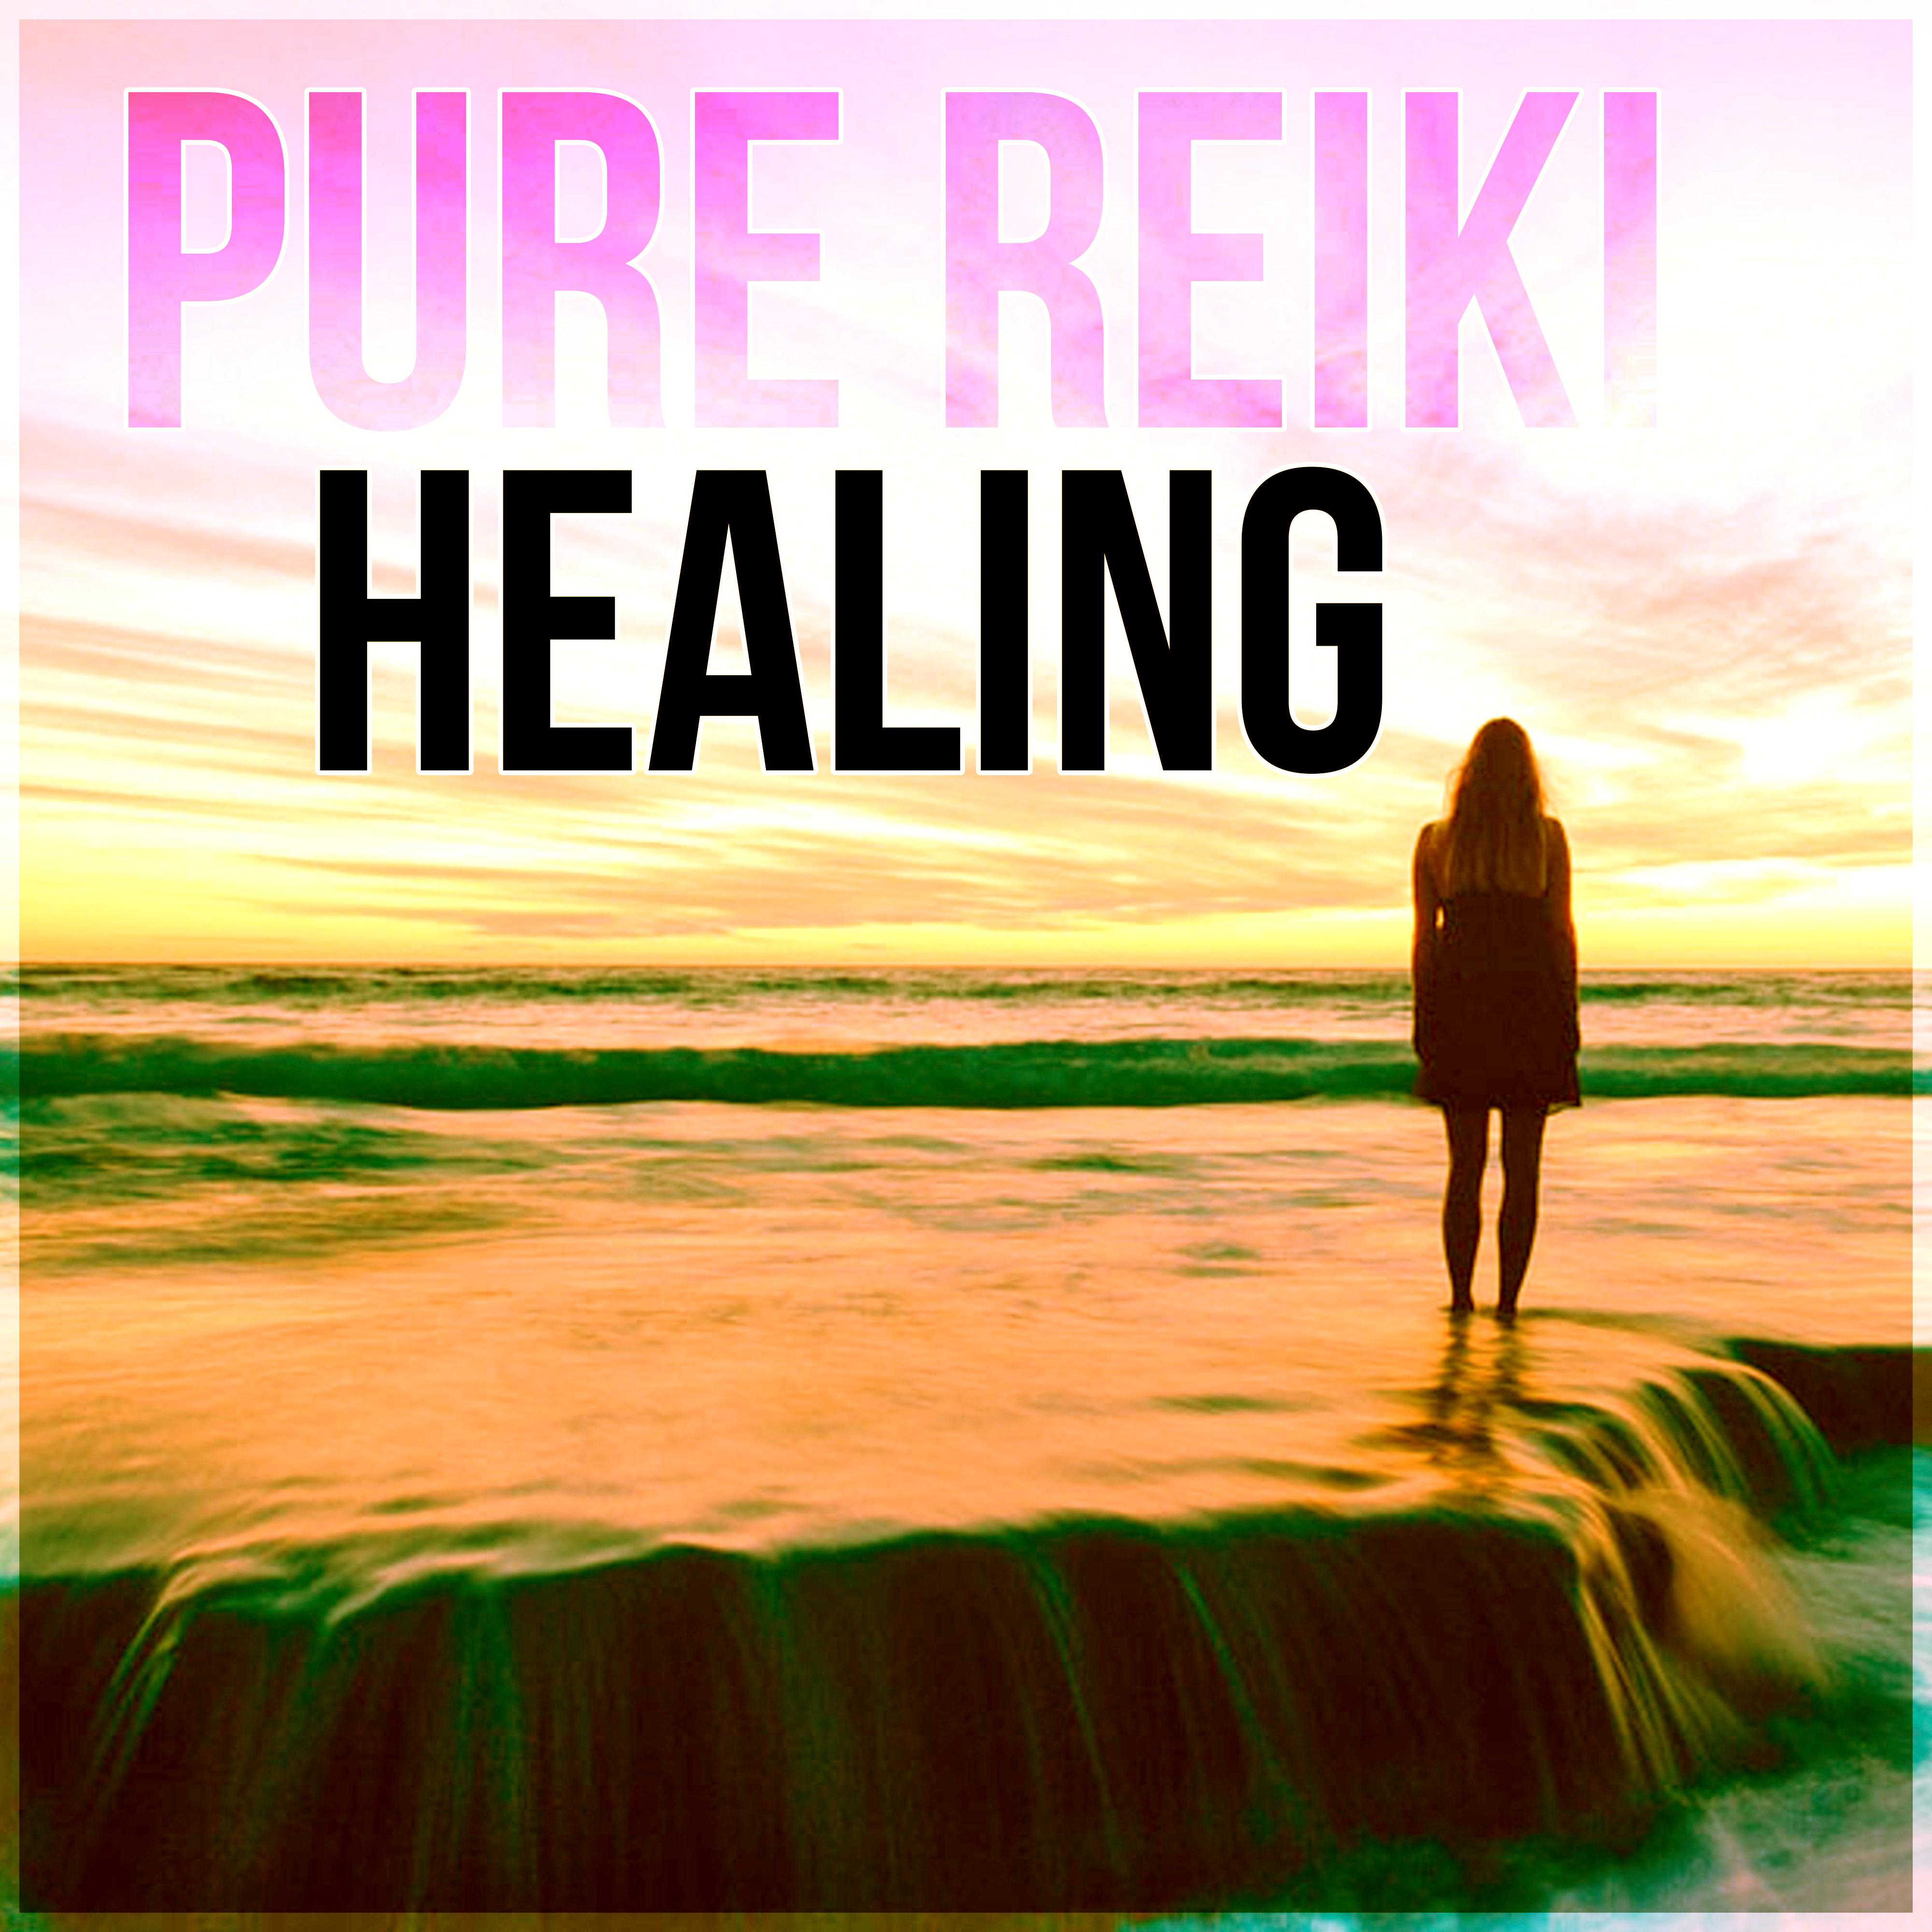 Pure Reiki Healing - Spiritual Healing, Bio Energy, Zen Music, Positive Thinking, Sun Salutation